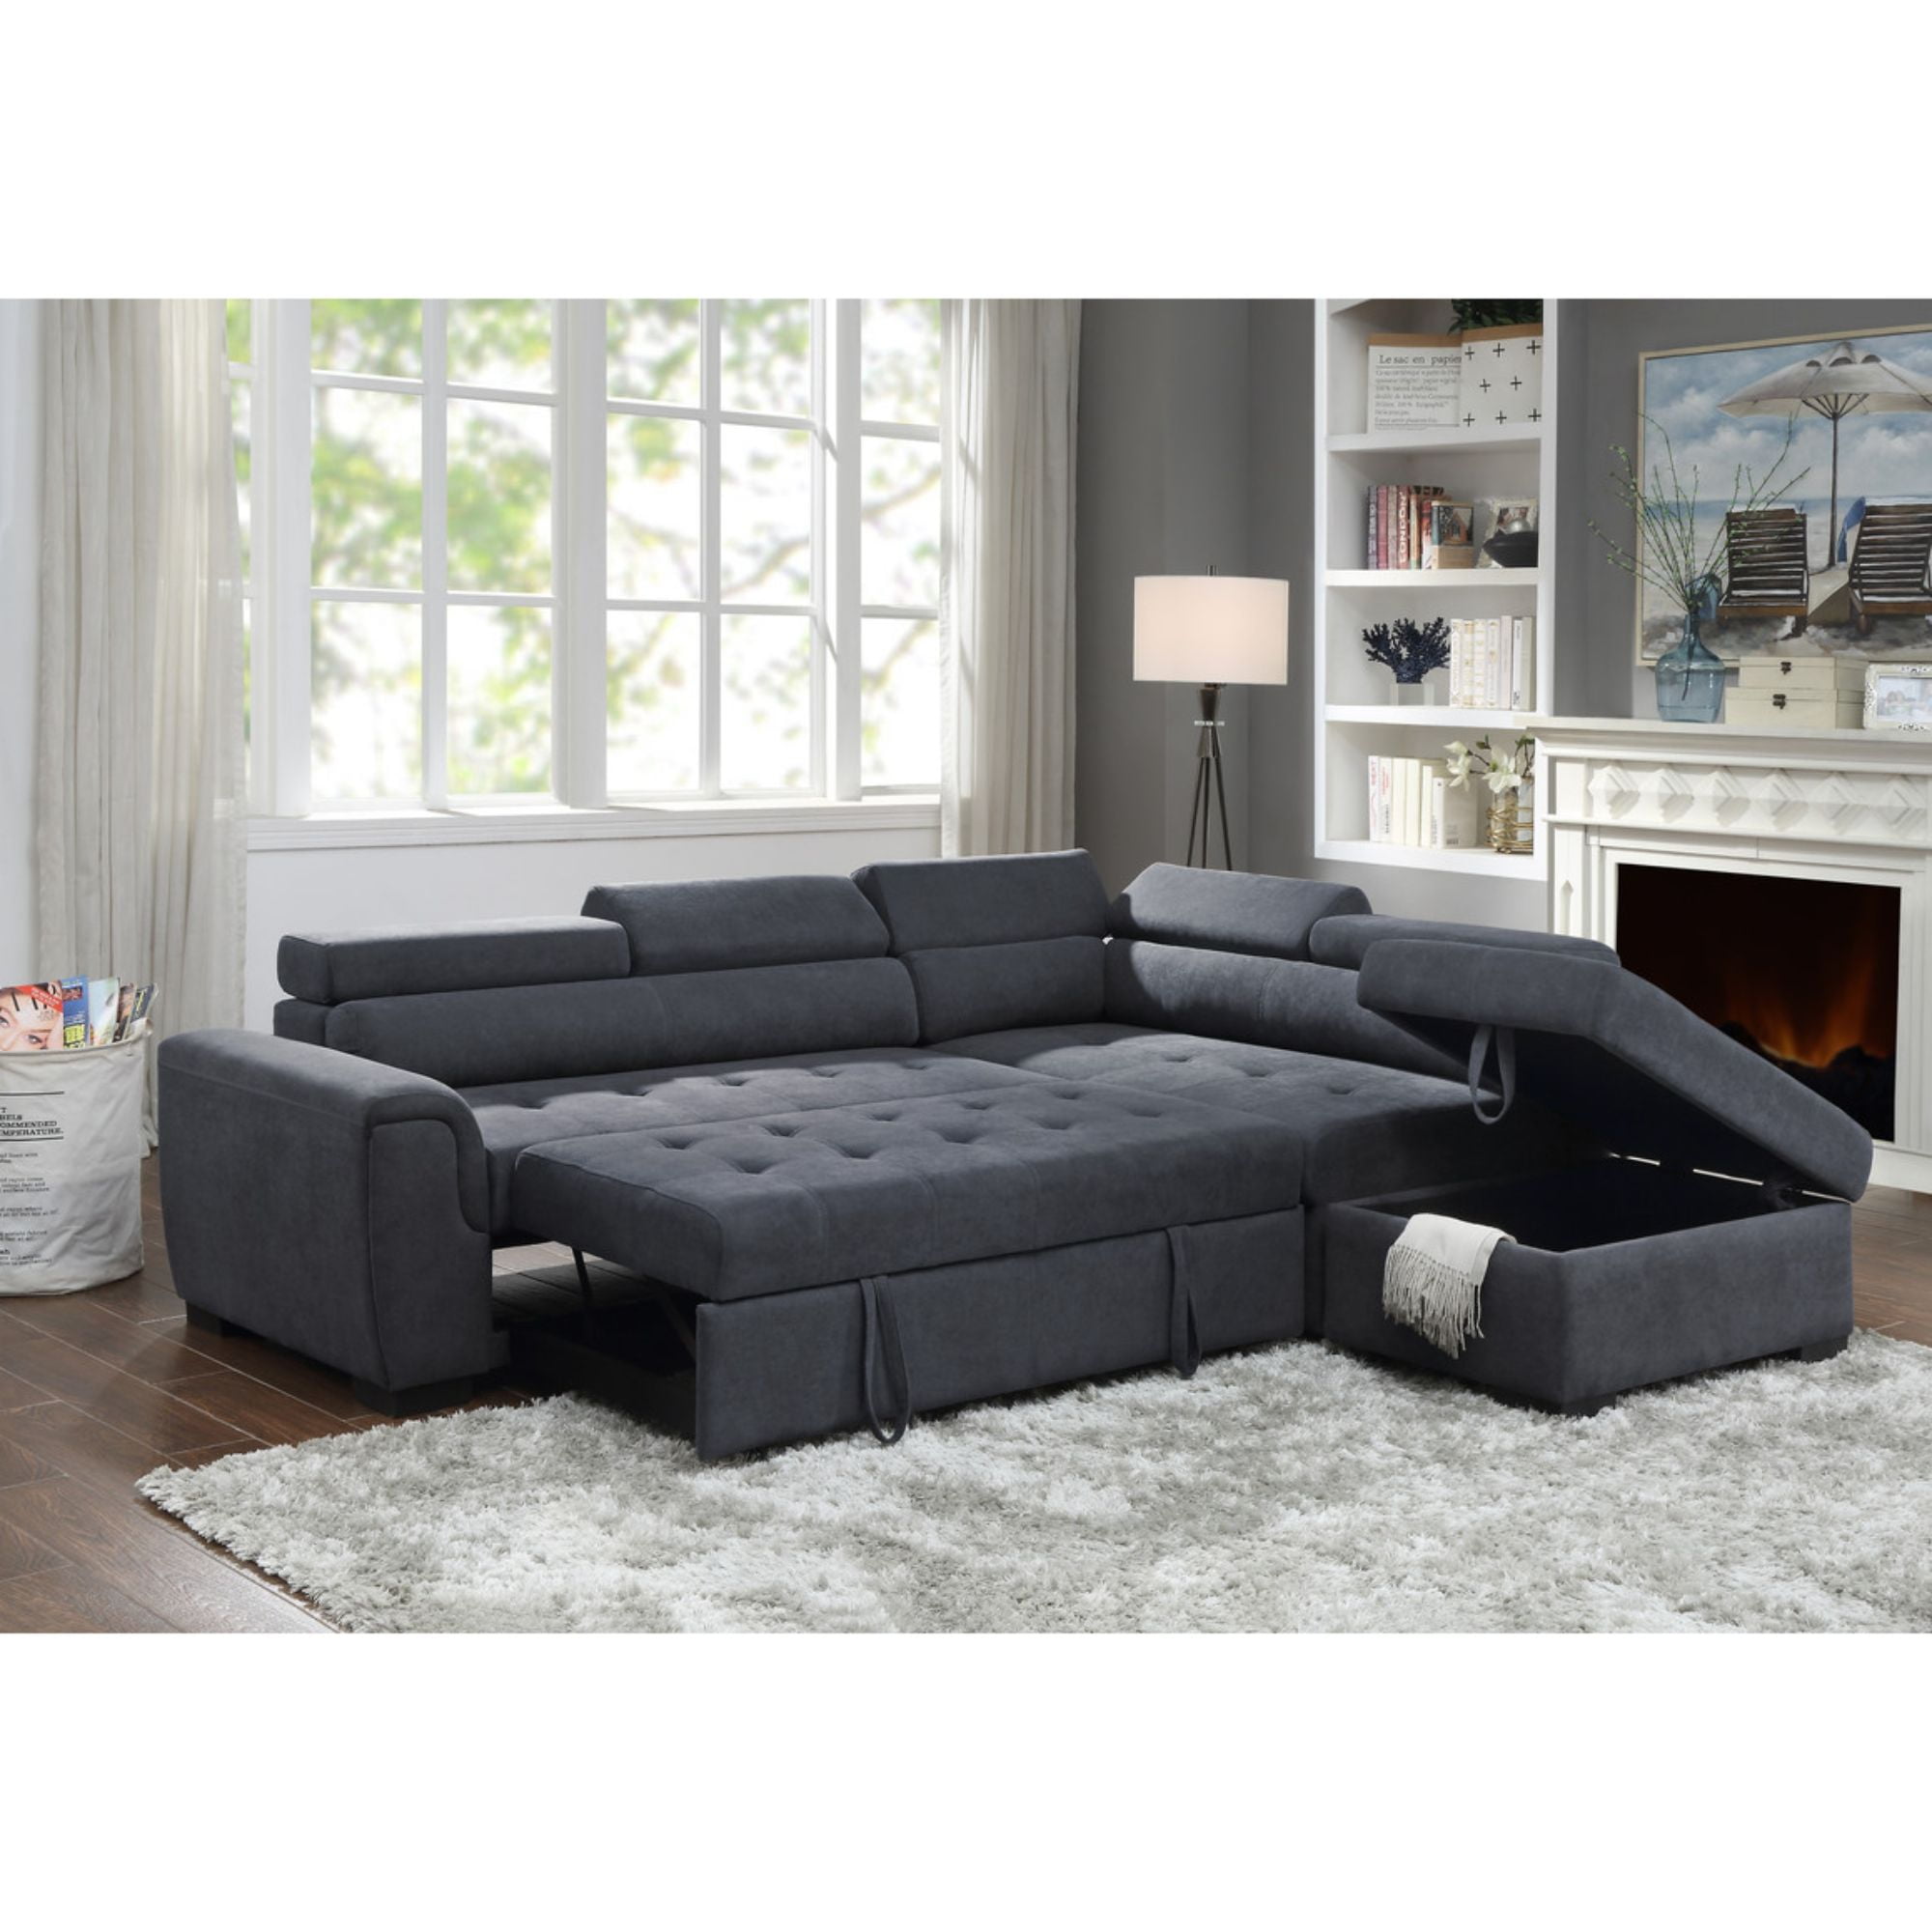 Acme Furniture Nardo Storage Sleeper, Acme Nardo Storage Sleeper Sectional Sofa